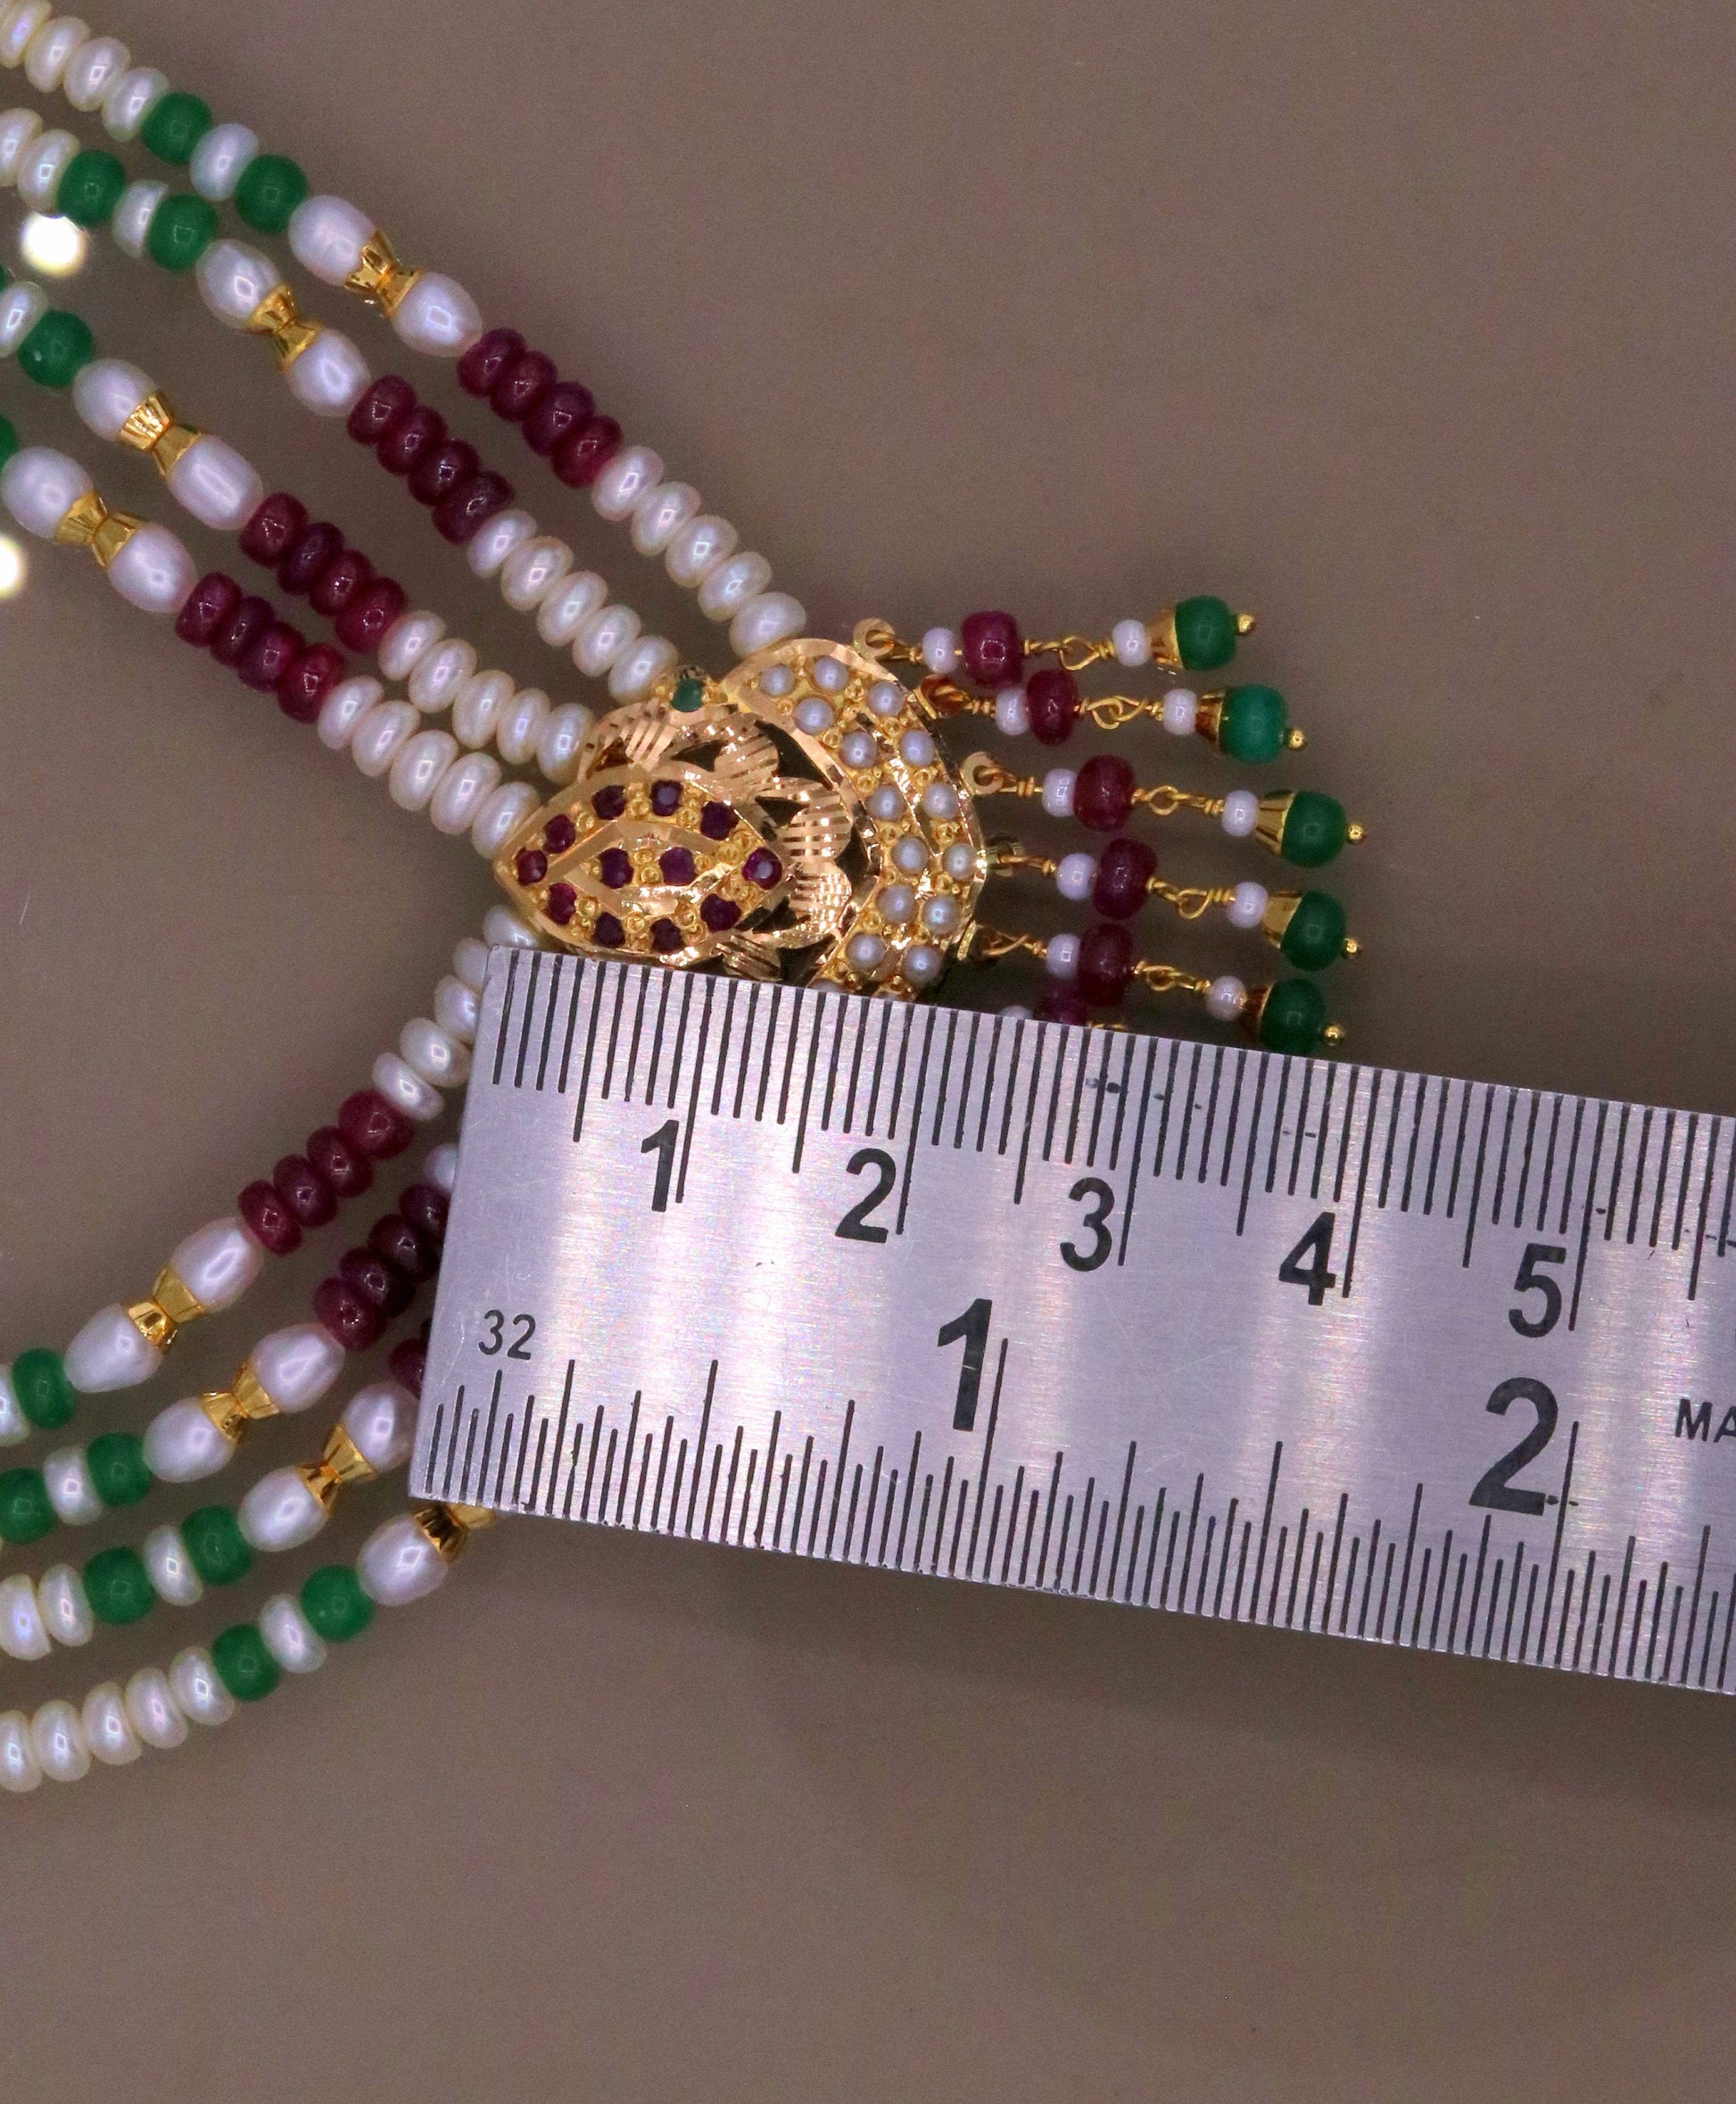 Handmade genuine 22kt yellow gold handmade gorgeous necklace set with fabulous color beads , wedding tribal rajput punjabijewelry india - TRIBAL ORNAMENTS